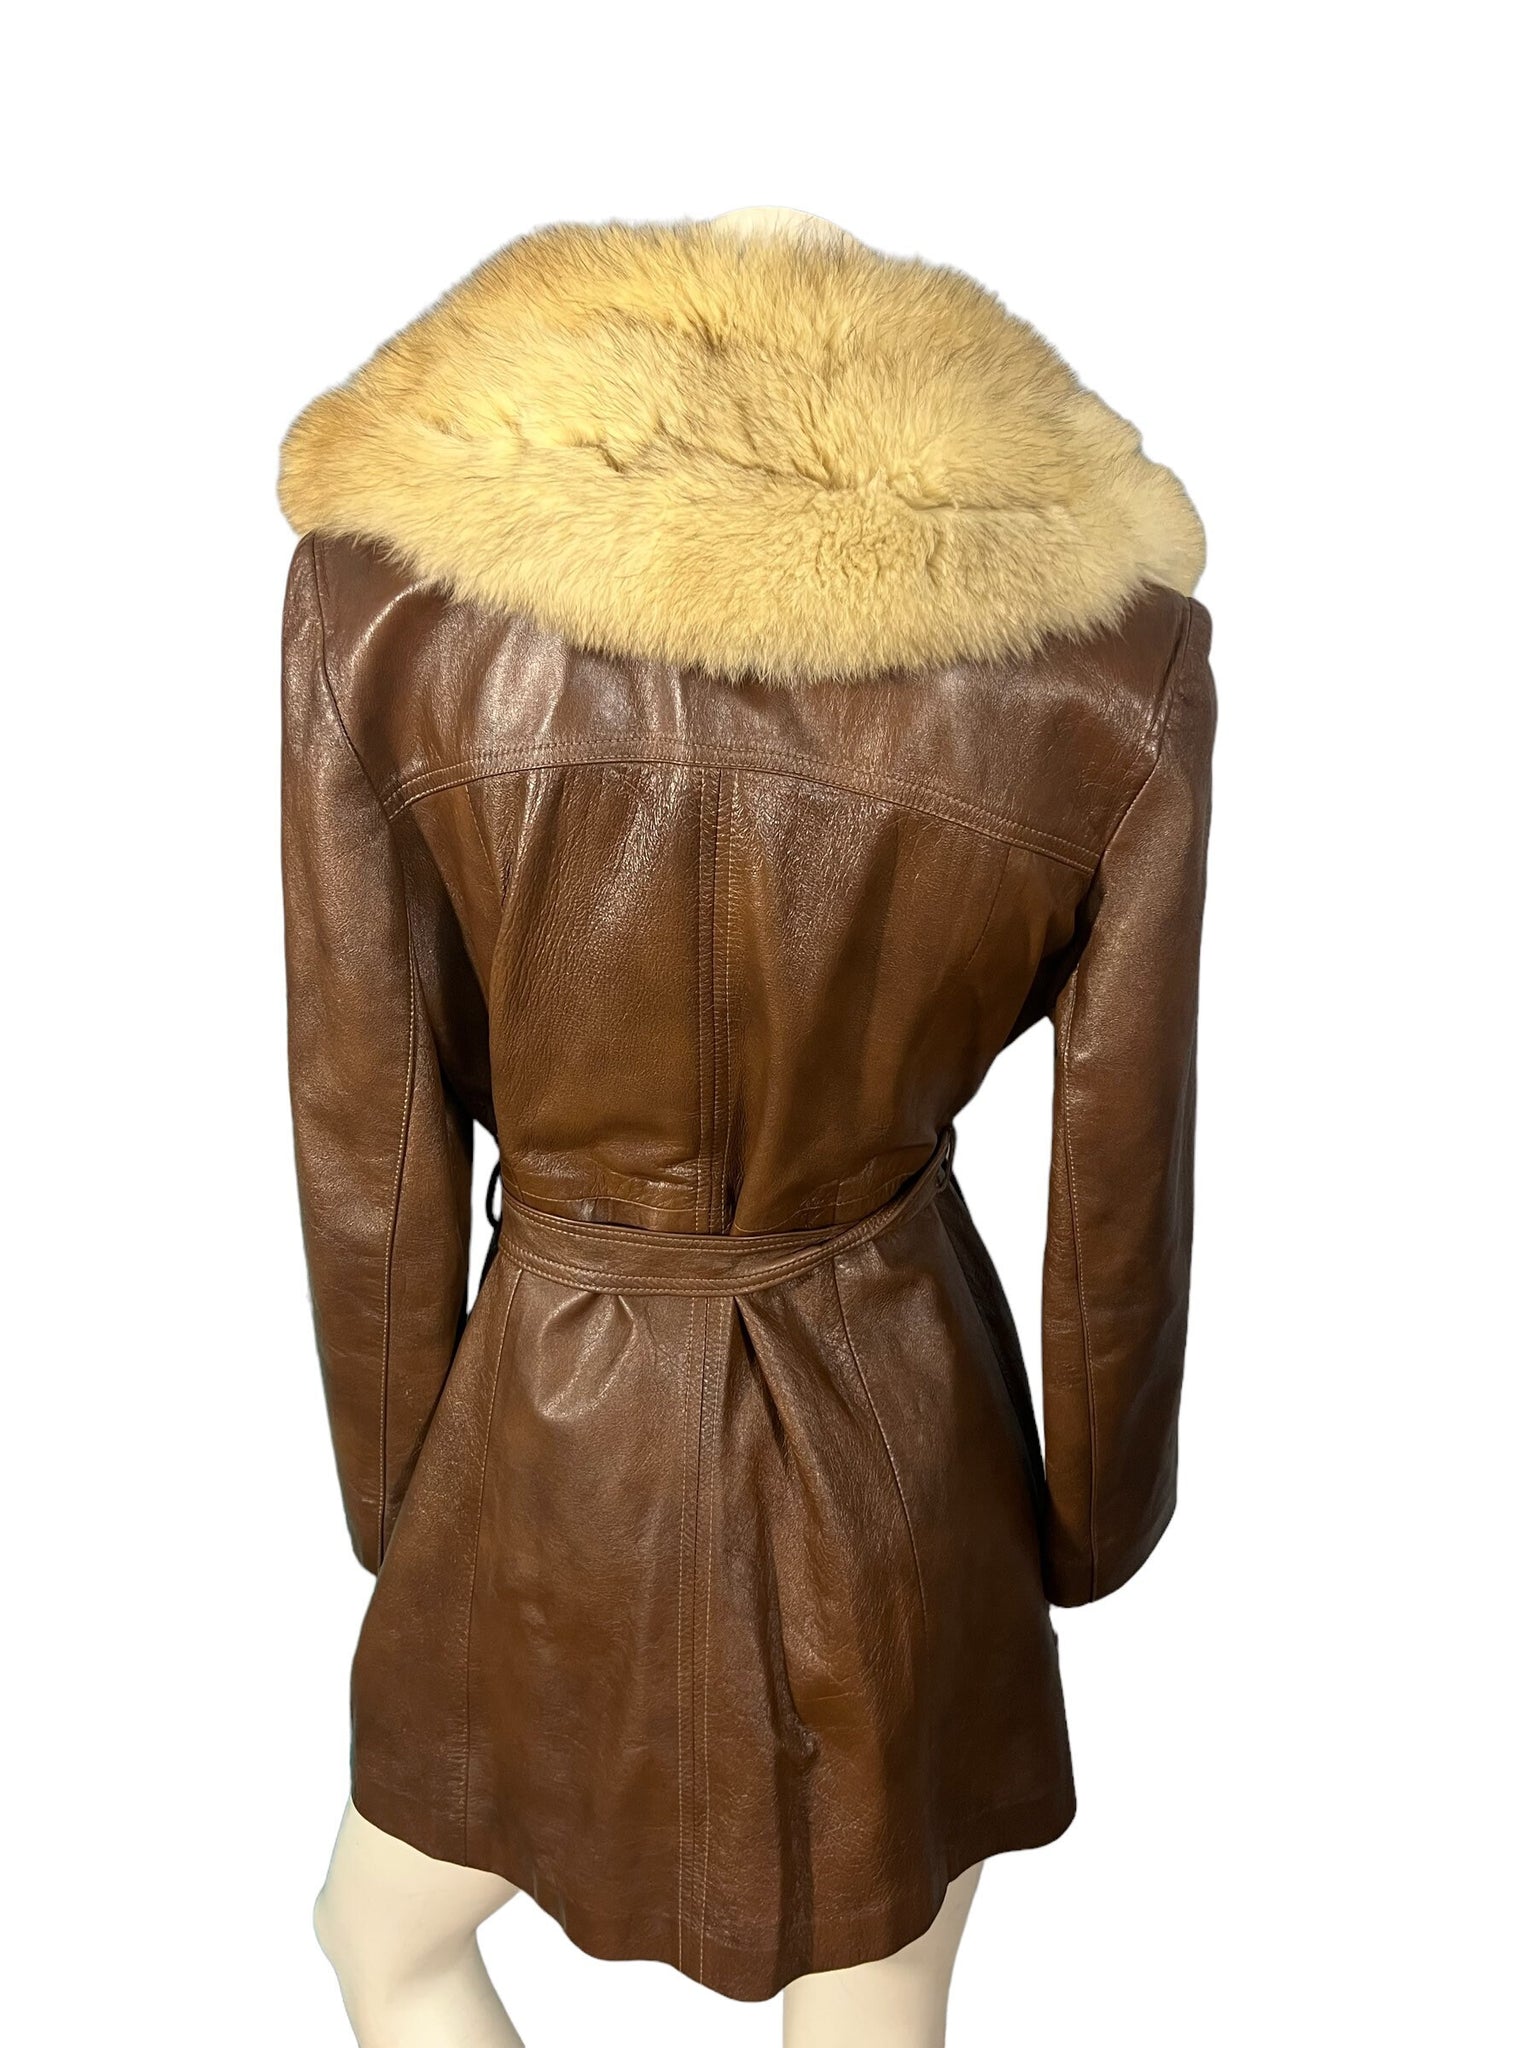 Vintage 70's leather pennylane coat L brown